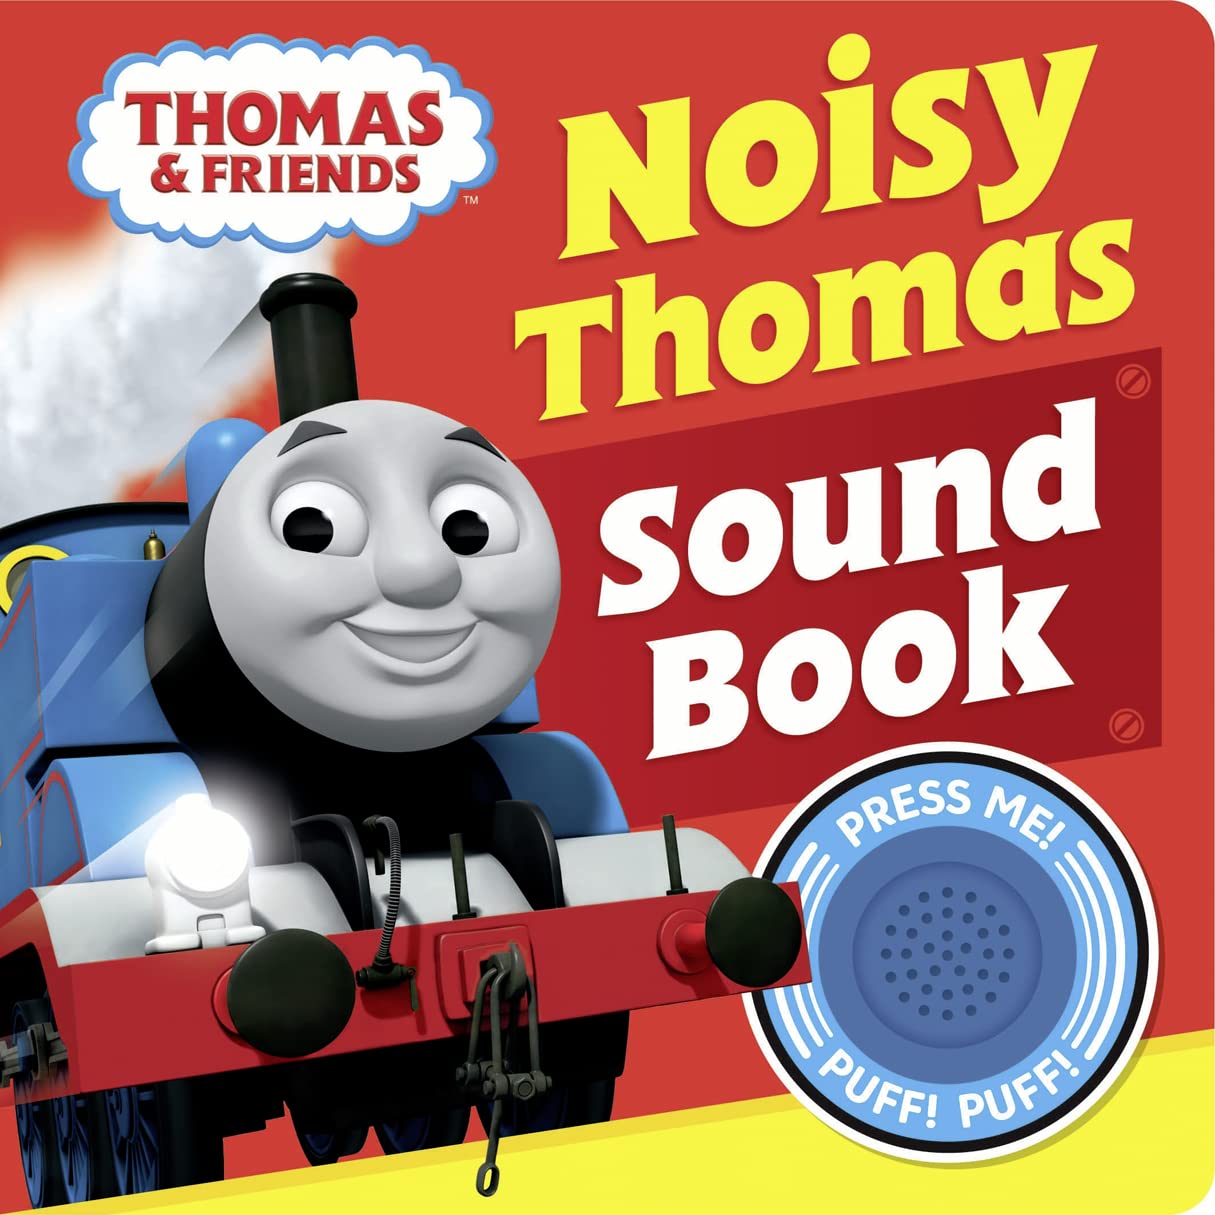 Thomas & Friends: Noisy Thomas Sound Book